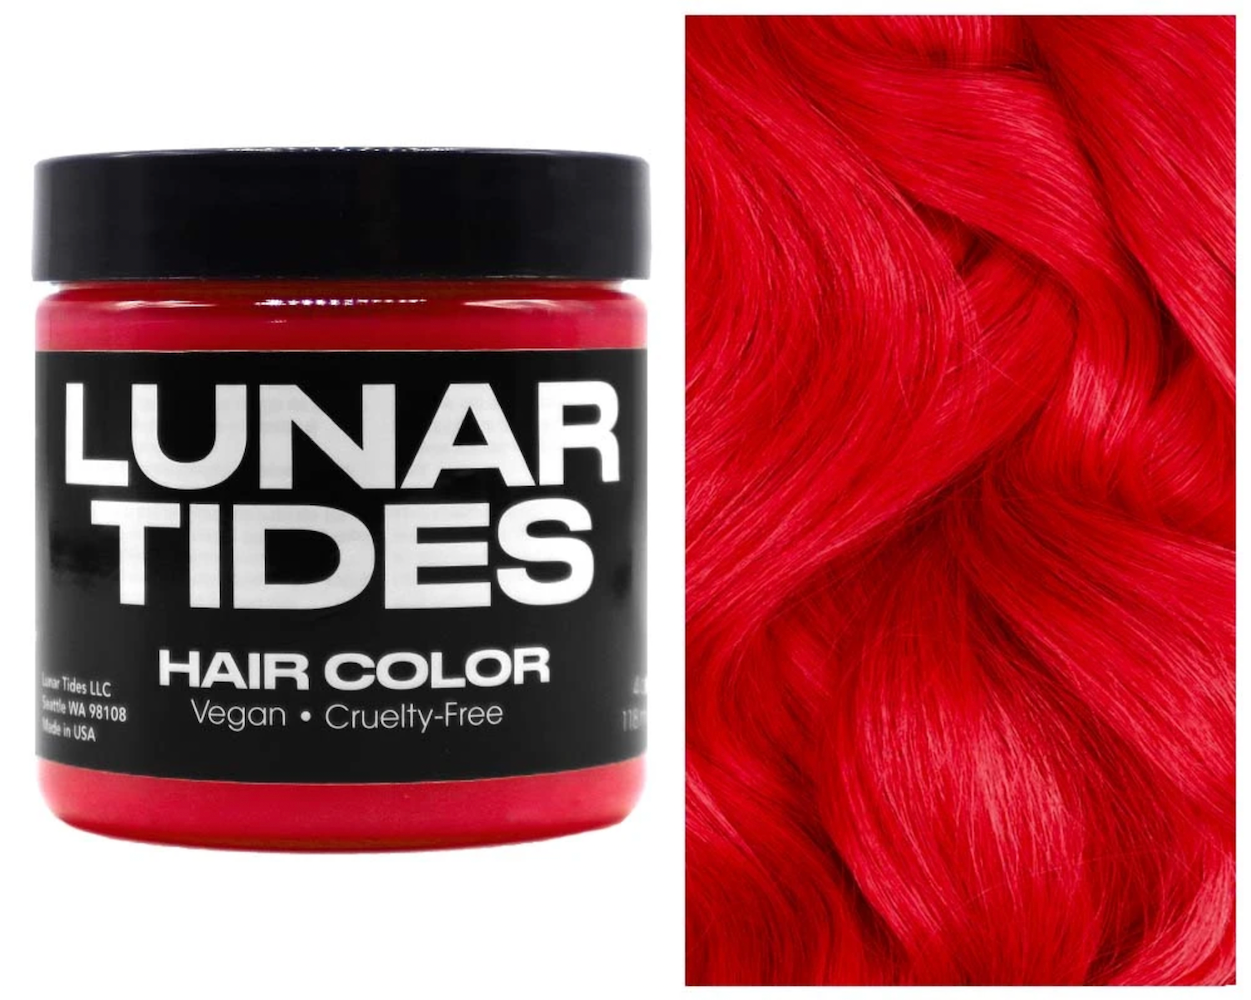 Lunar Tides Hair Dye - True Lust